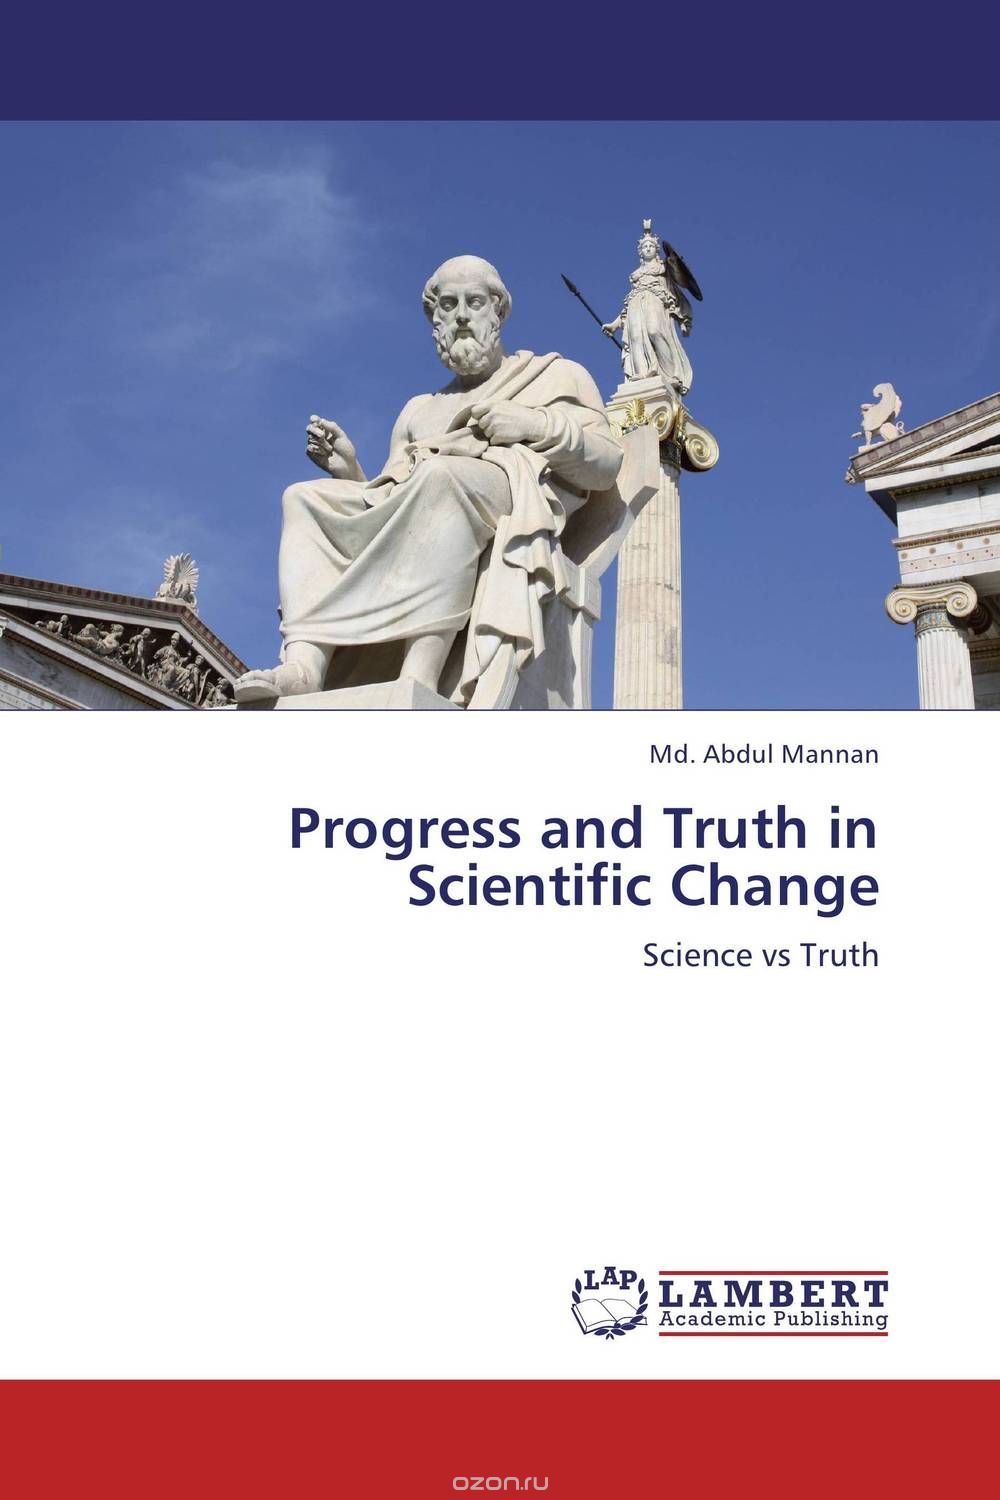 Progress and Truth in Scientific Change